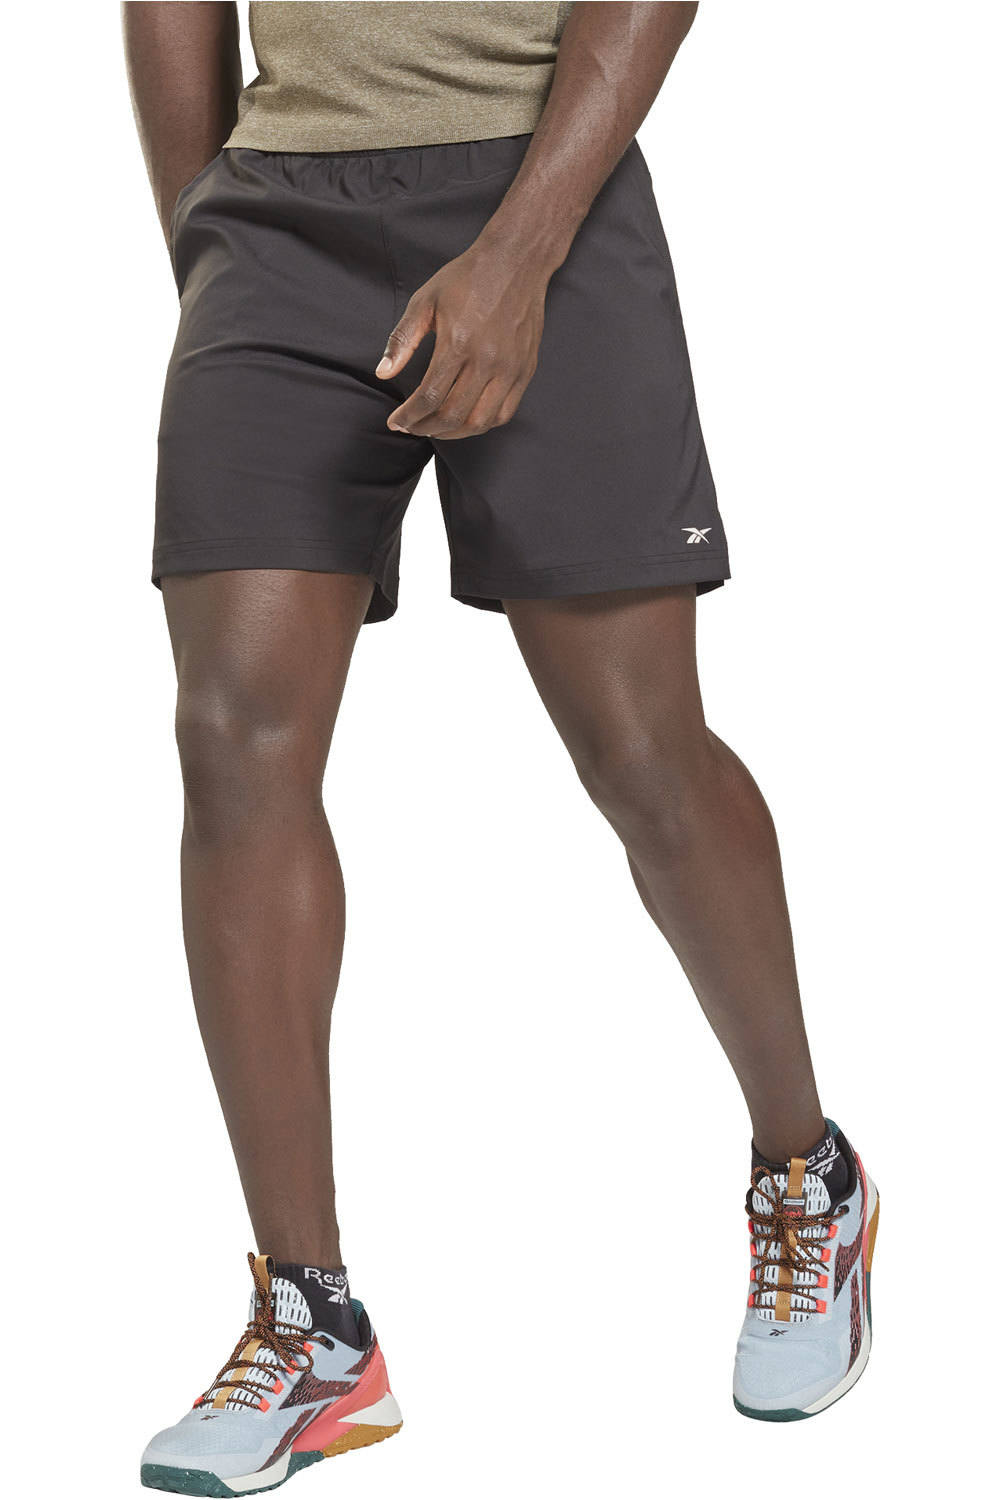 Reebok pantalón corto fitness hombre UBF Epic+ Short vista frontal